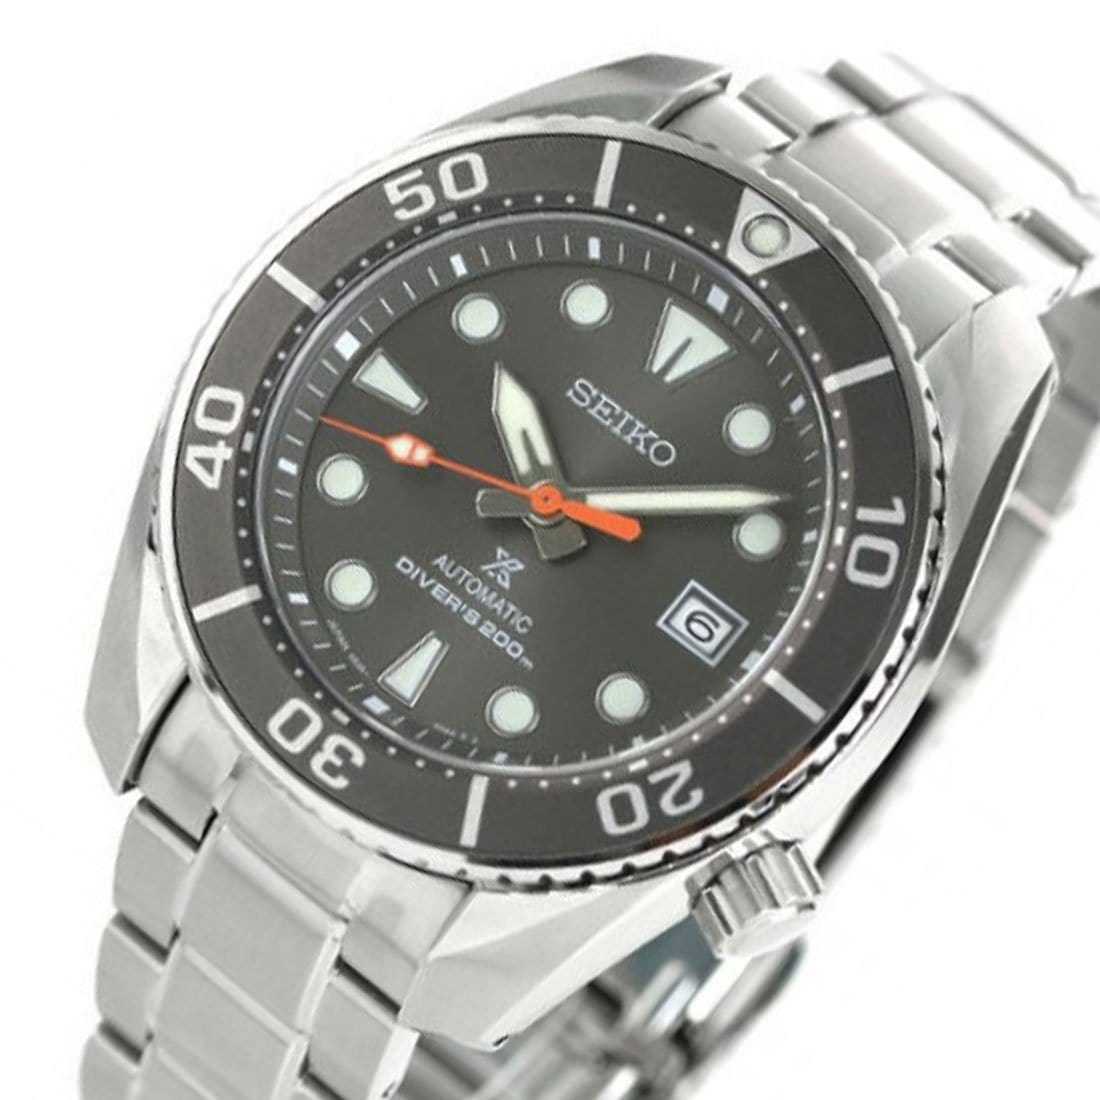 SBDC097 SBDC097J1 Seiko Prospex JDM Sumo Male Automatic Watch